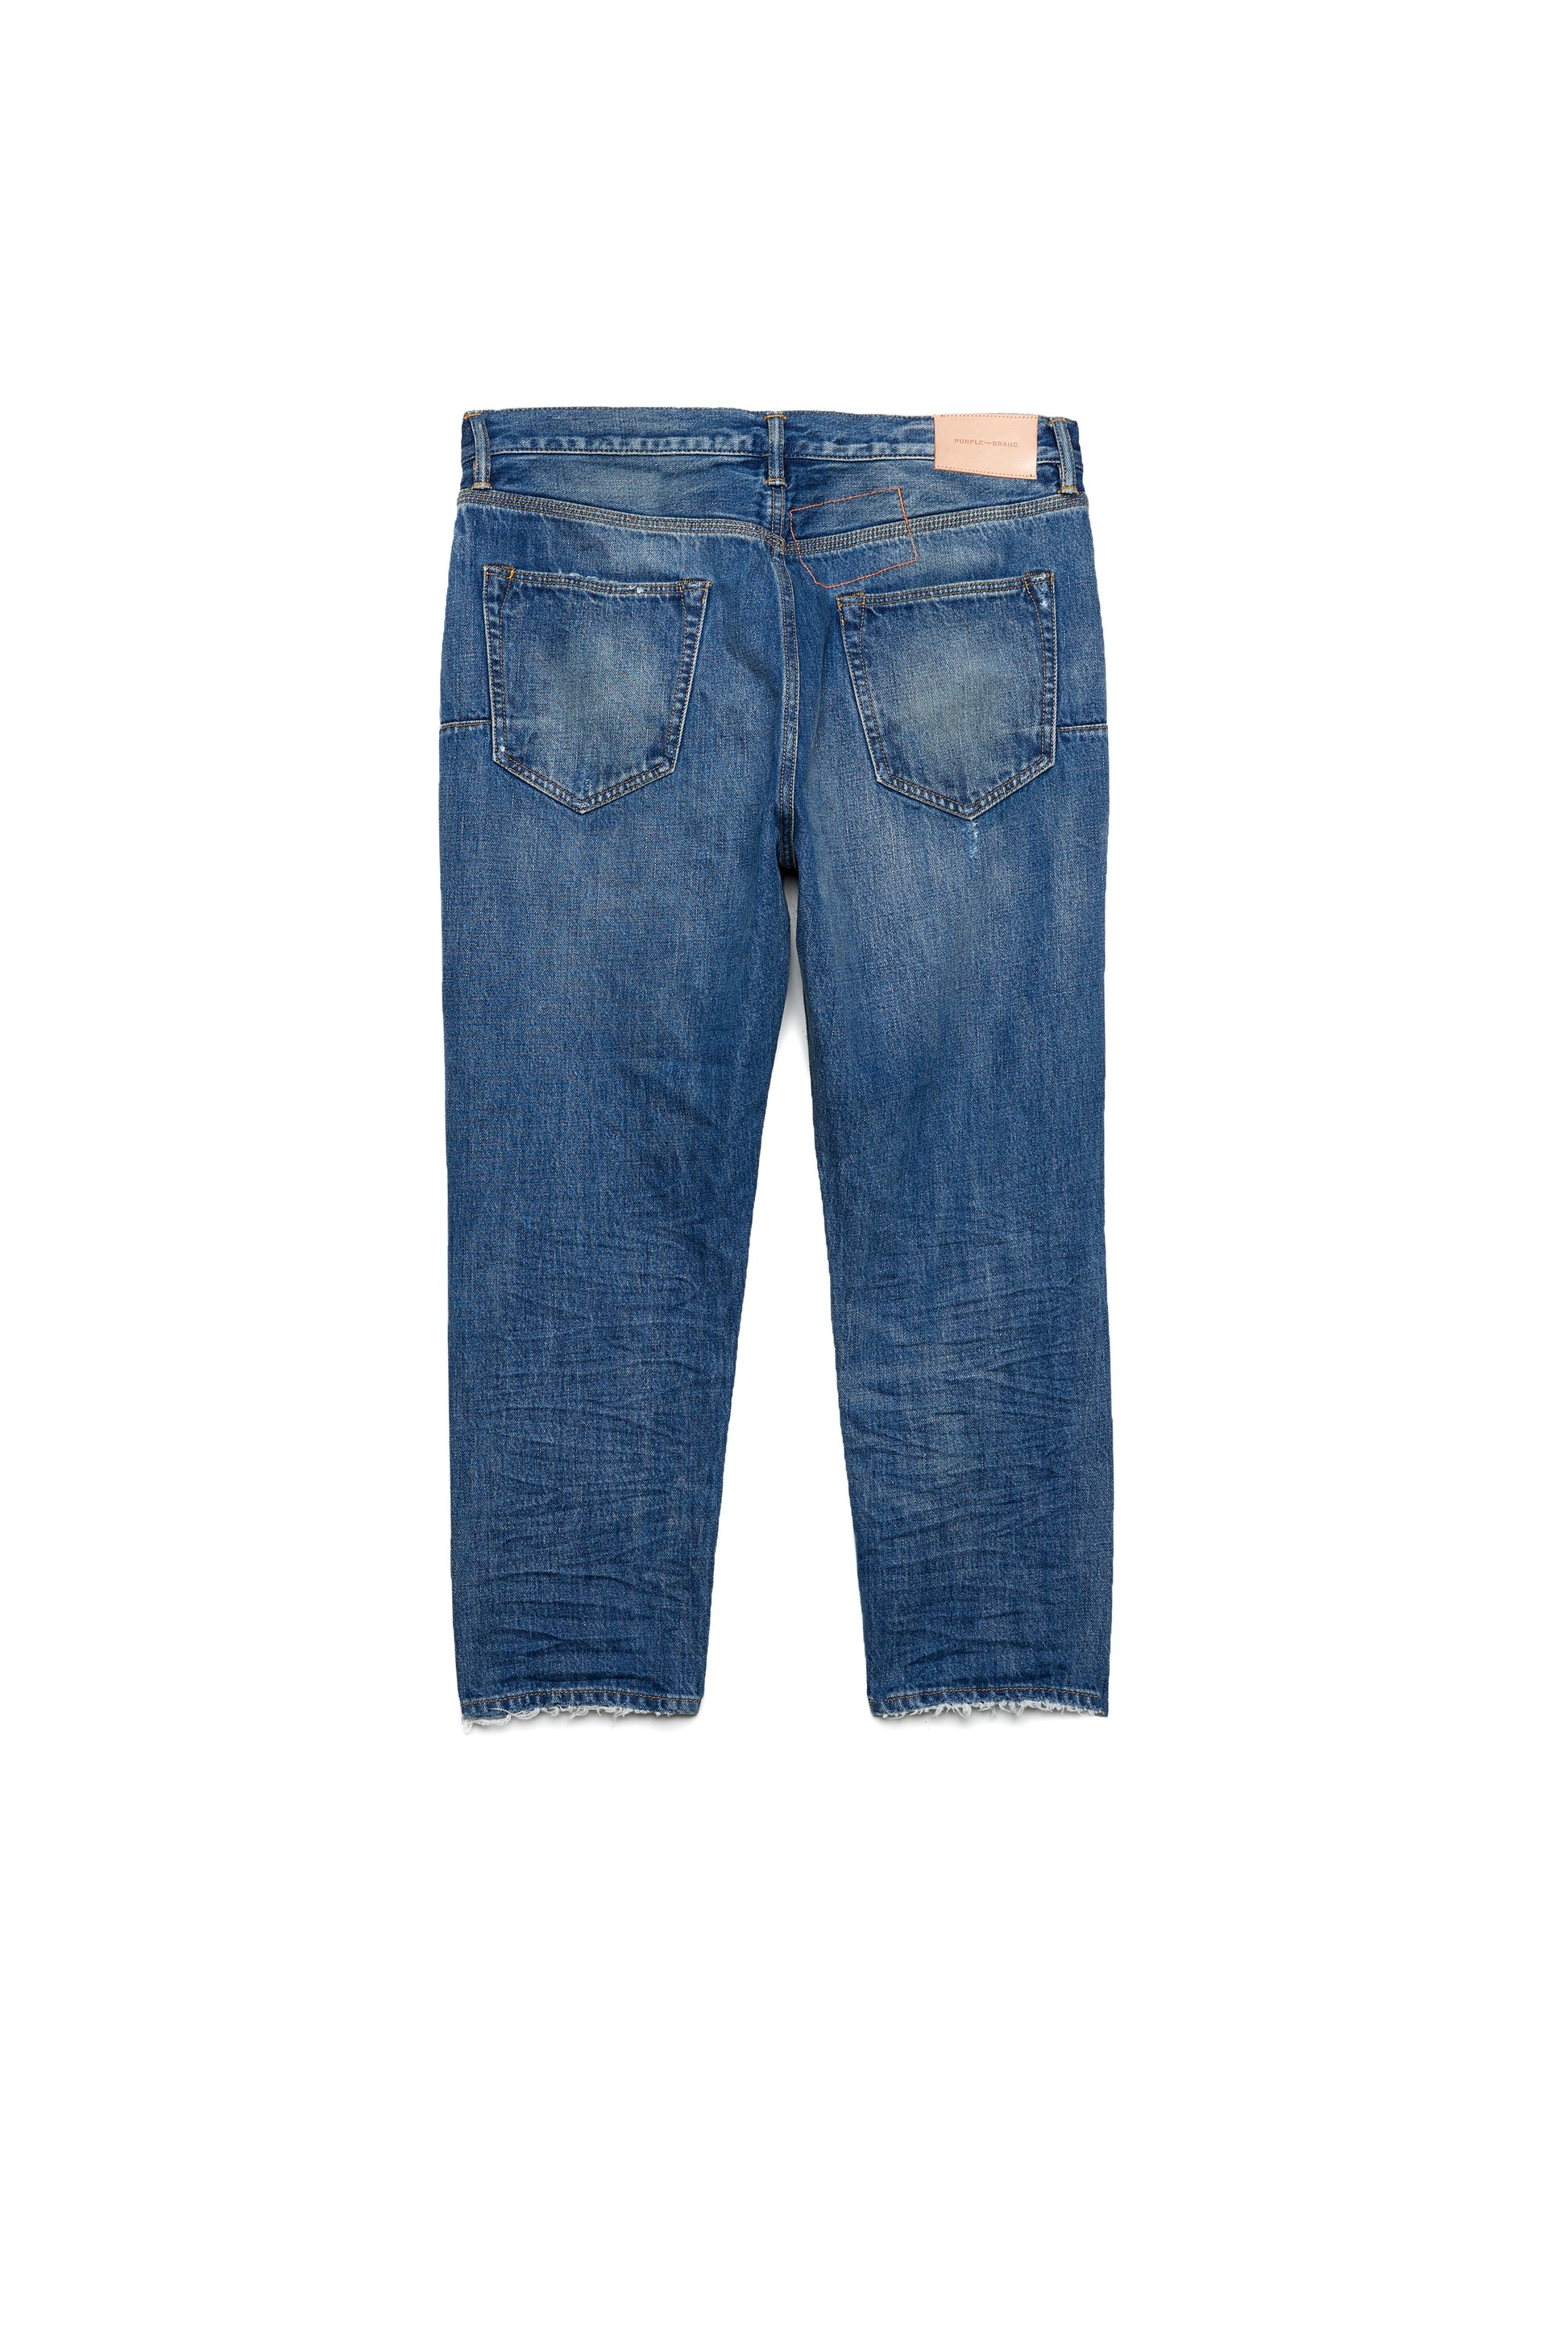 PURPLE BRAND - Men's Denim Jean - Long Rise Relaxed - Style No. P003 - Indigo Vintage Distress Crop - Back